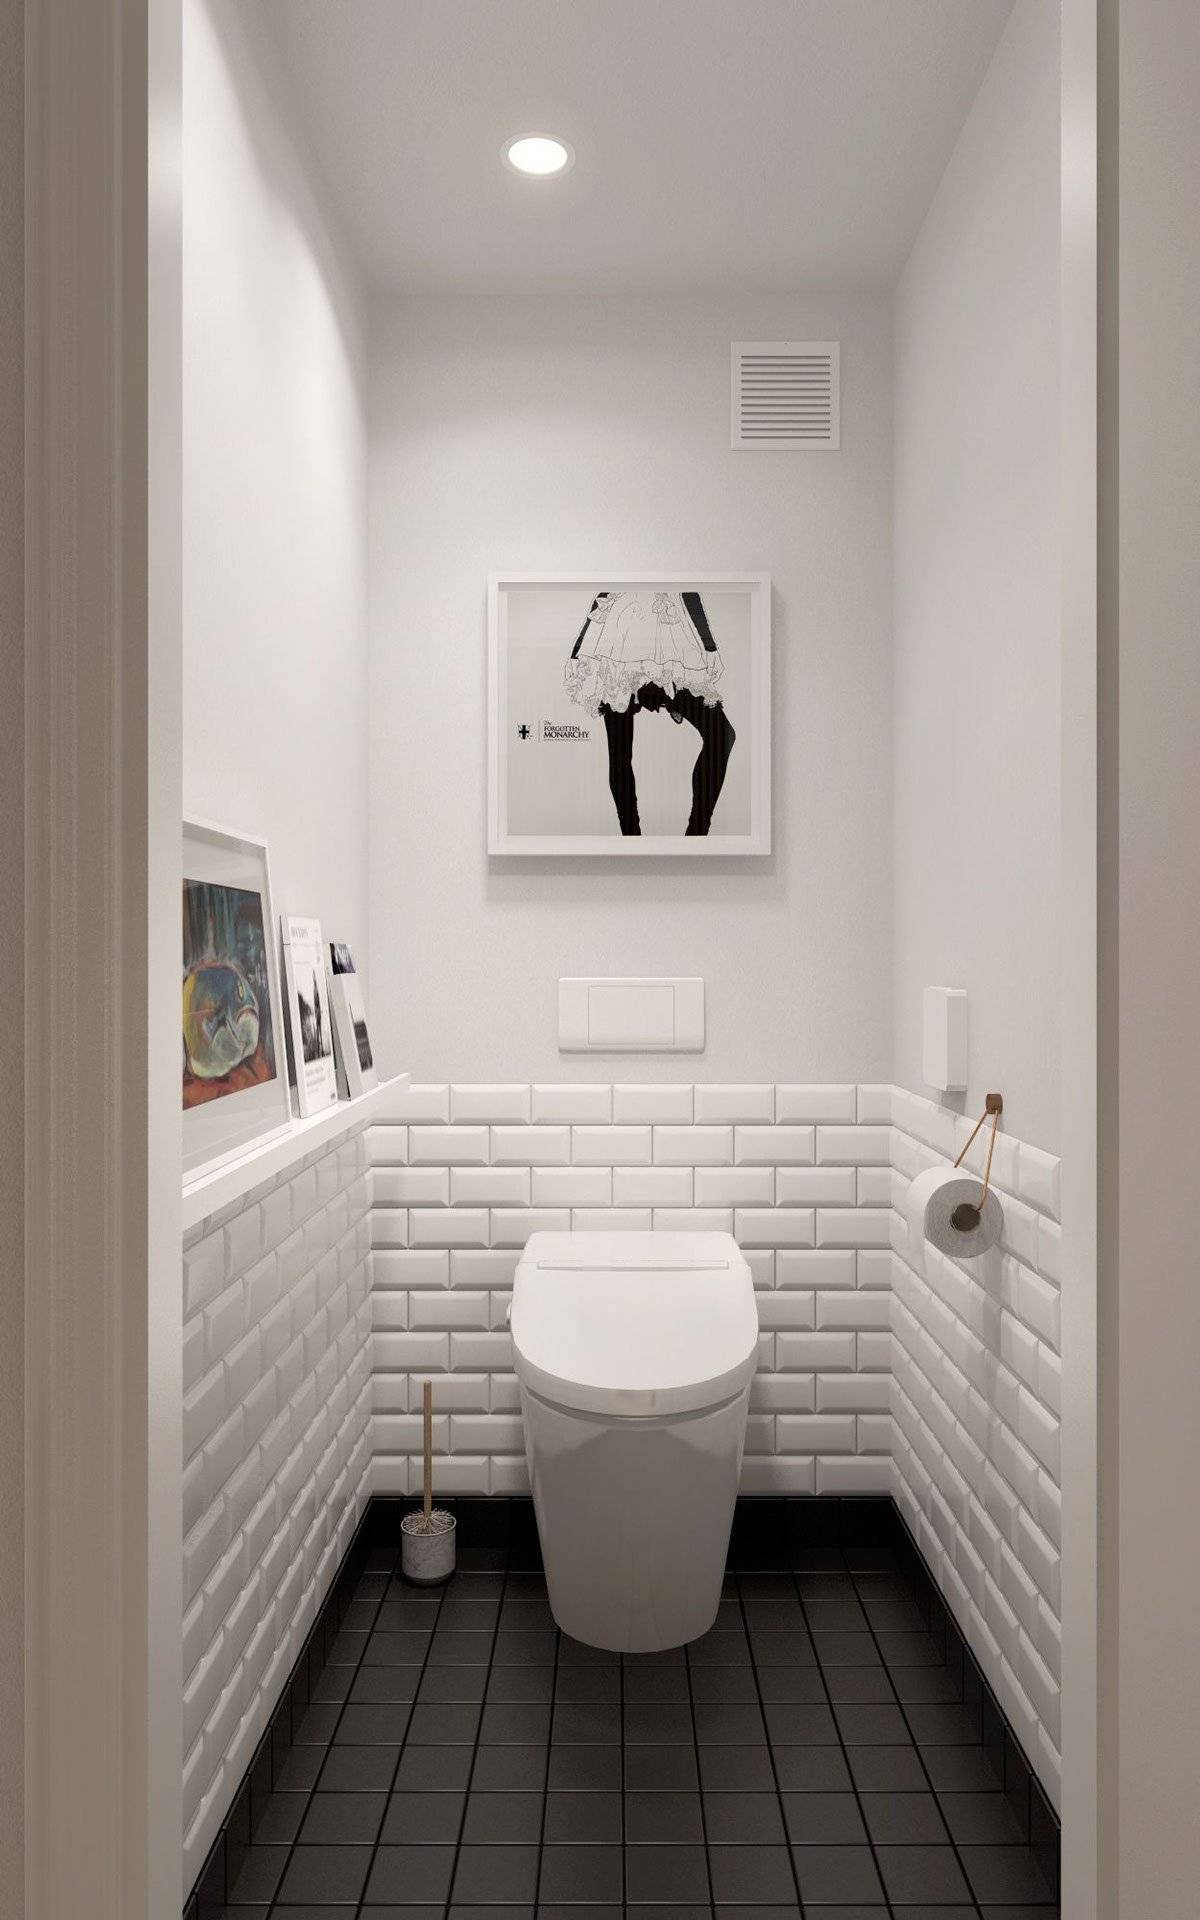 Ремонт туалета своими руками – фото дизайна в квартире